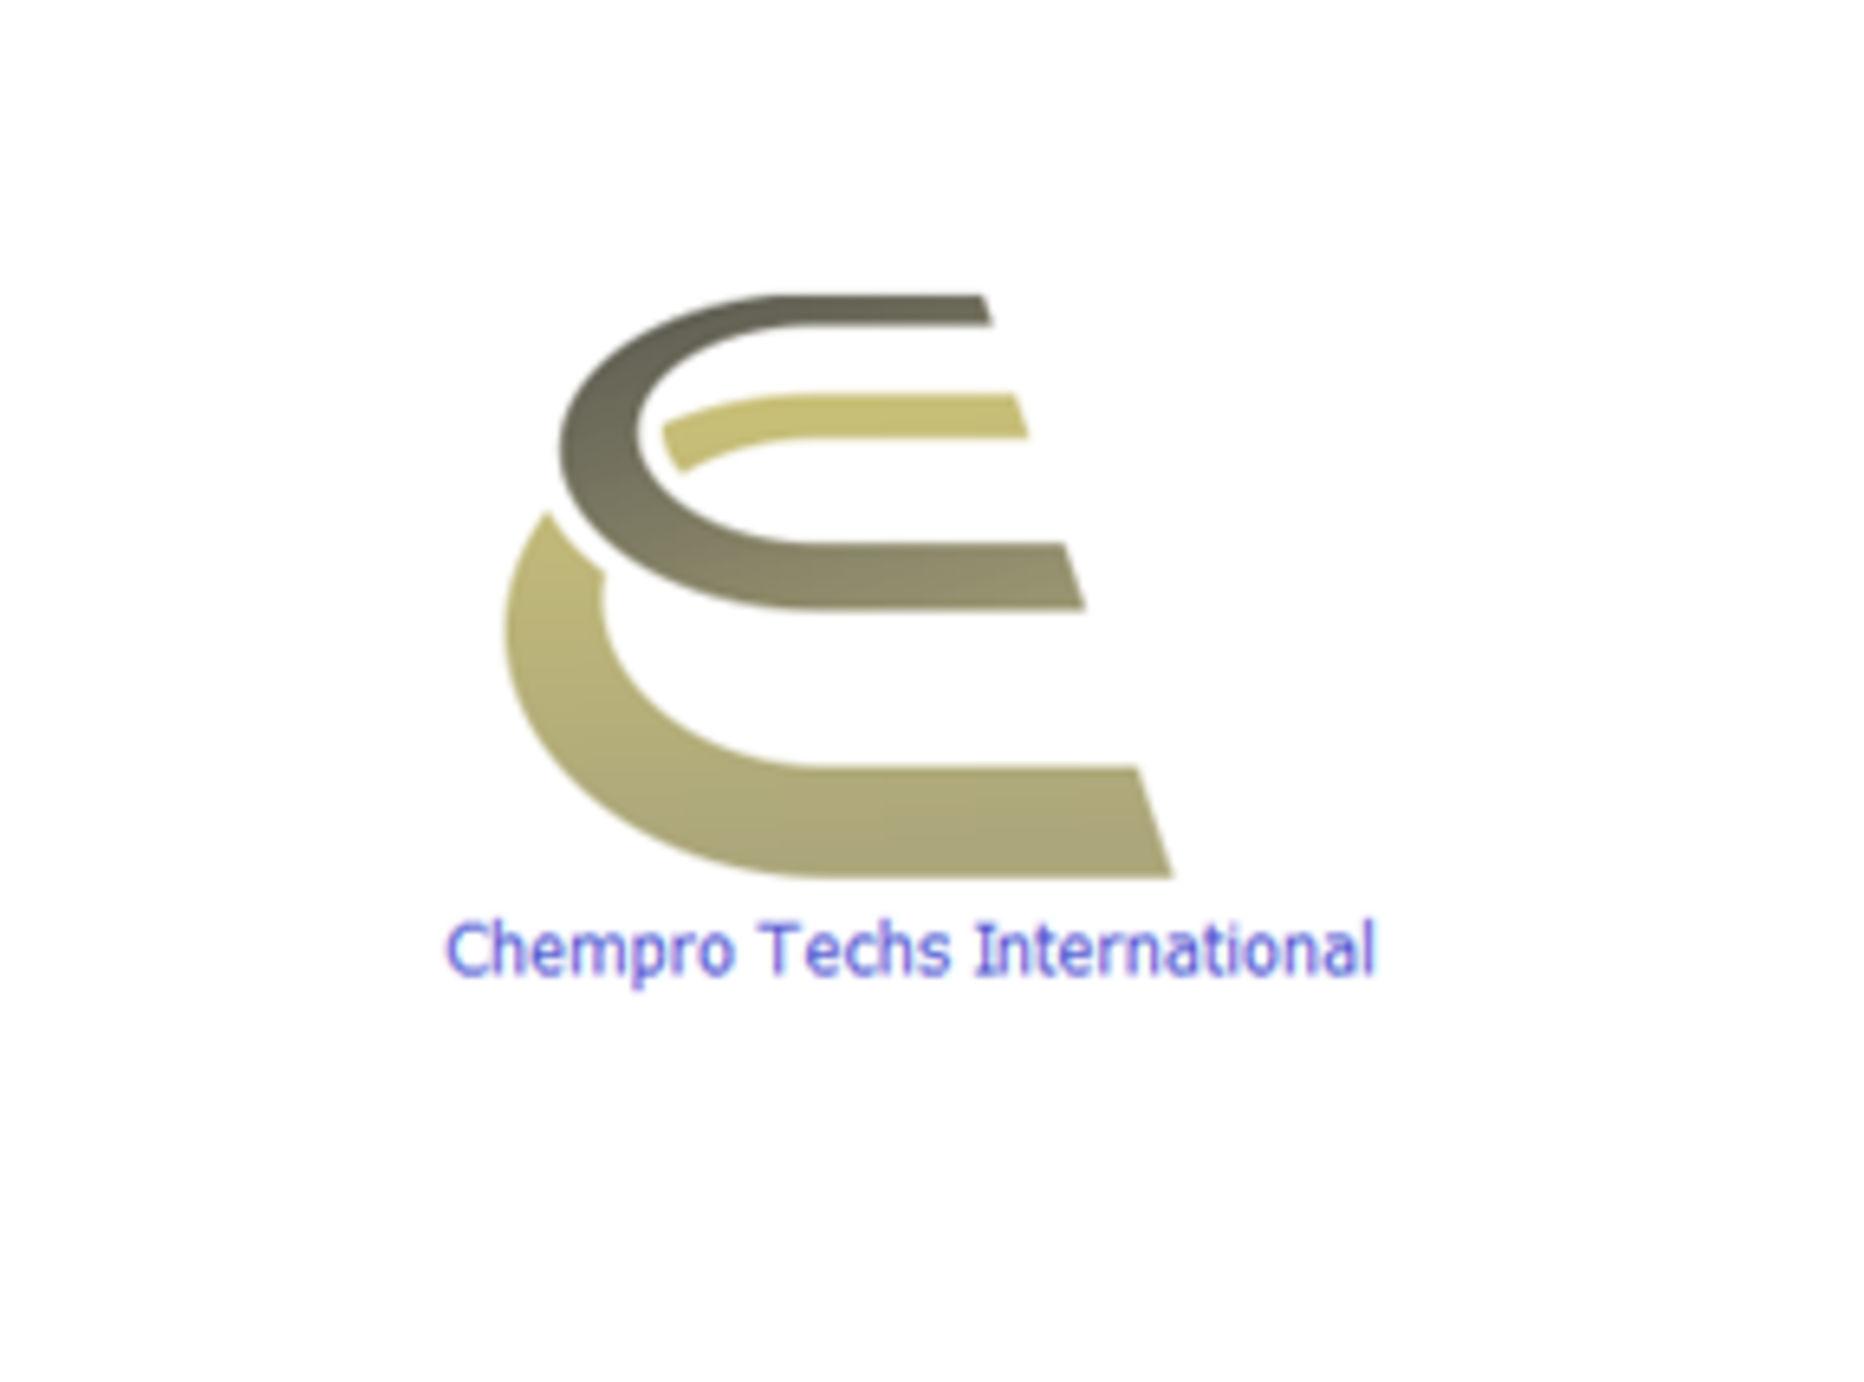 Chempro Tech International